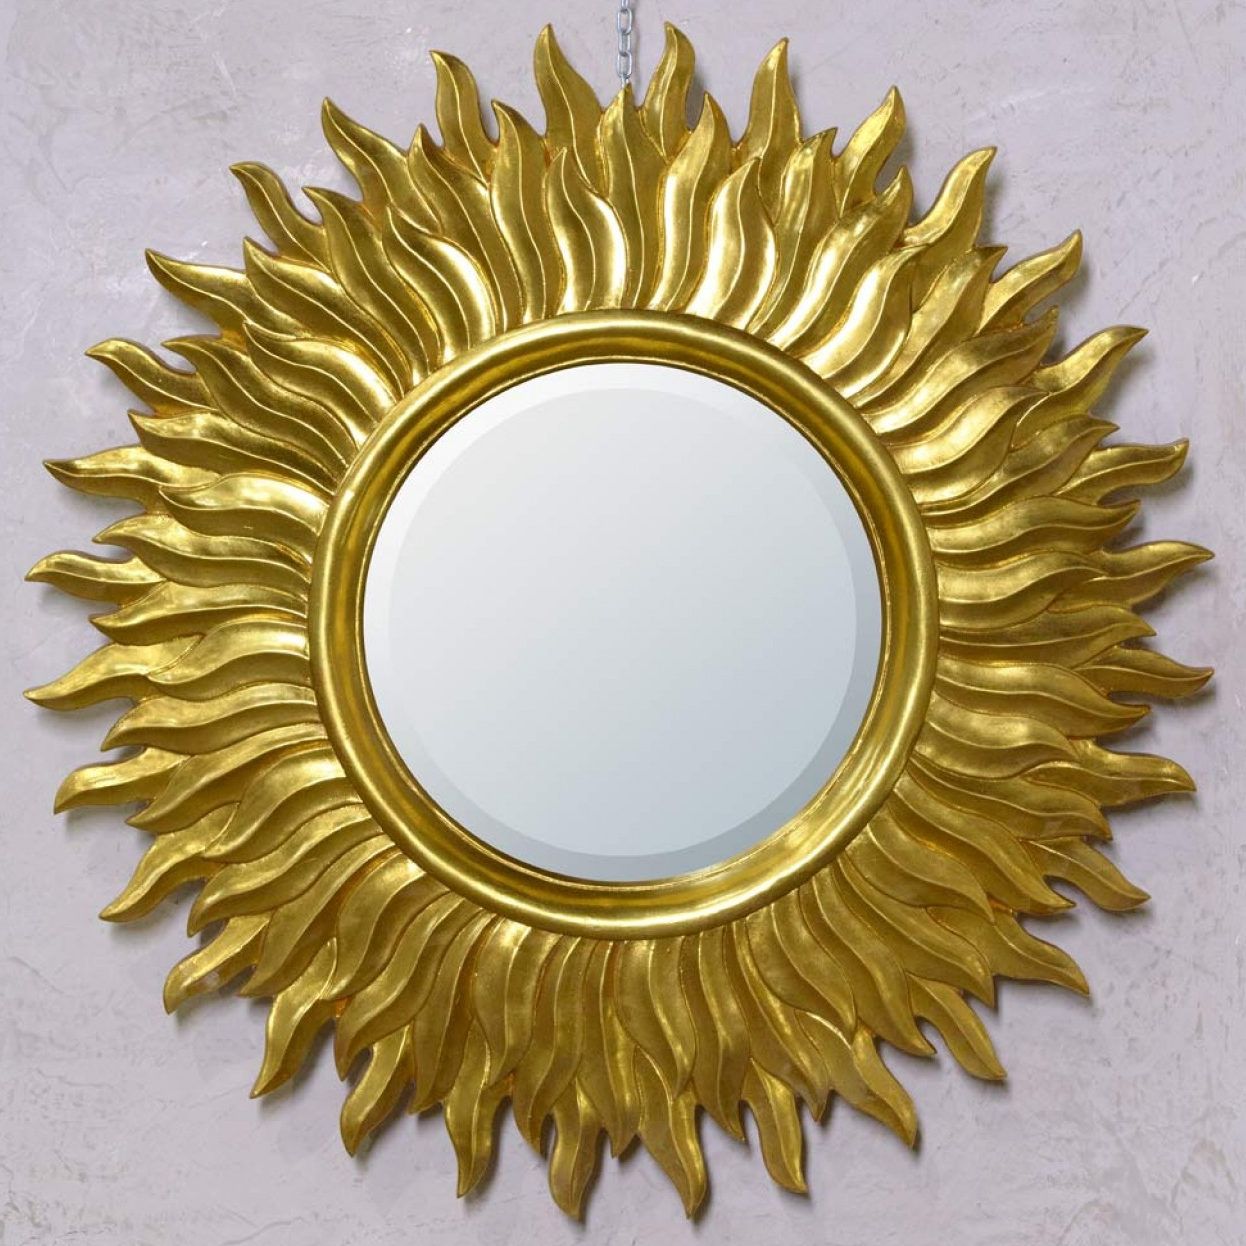 Antique Style Sunburst Gold Round Decorative Wall Mirror Pertaining To Leaf Post Sunburst Round Wall Mirrors (View 6 of 15)